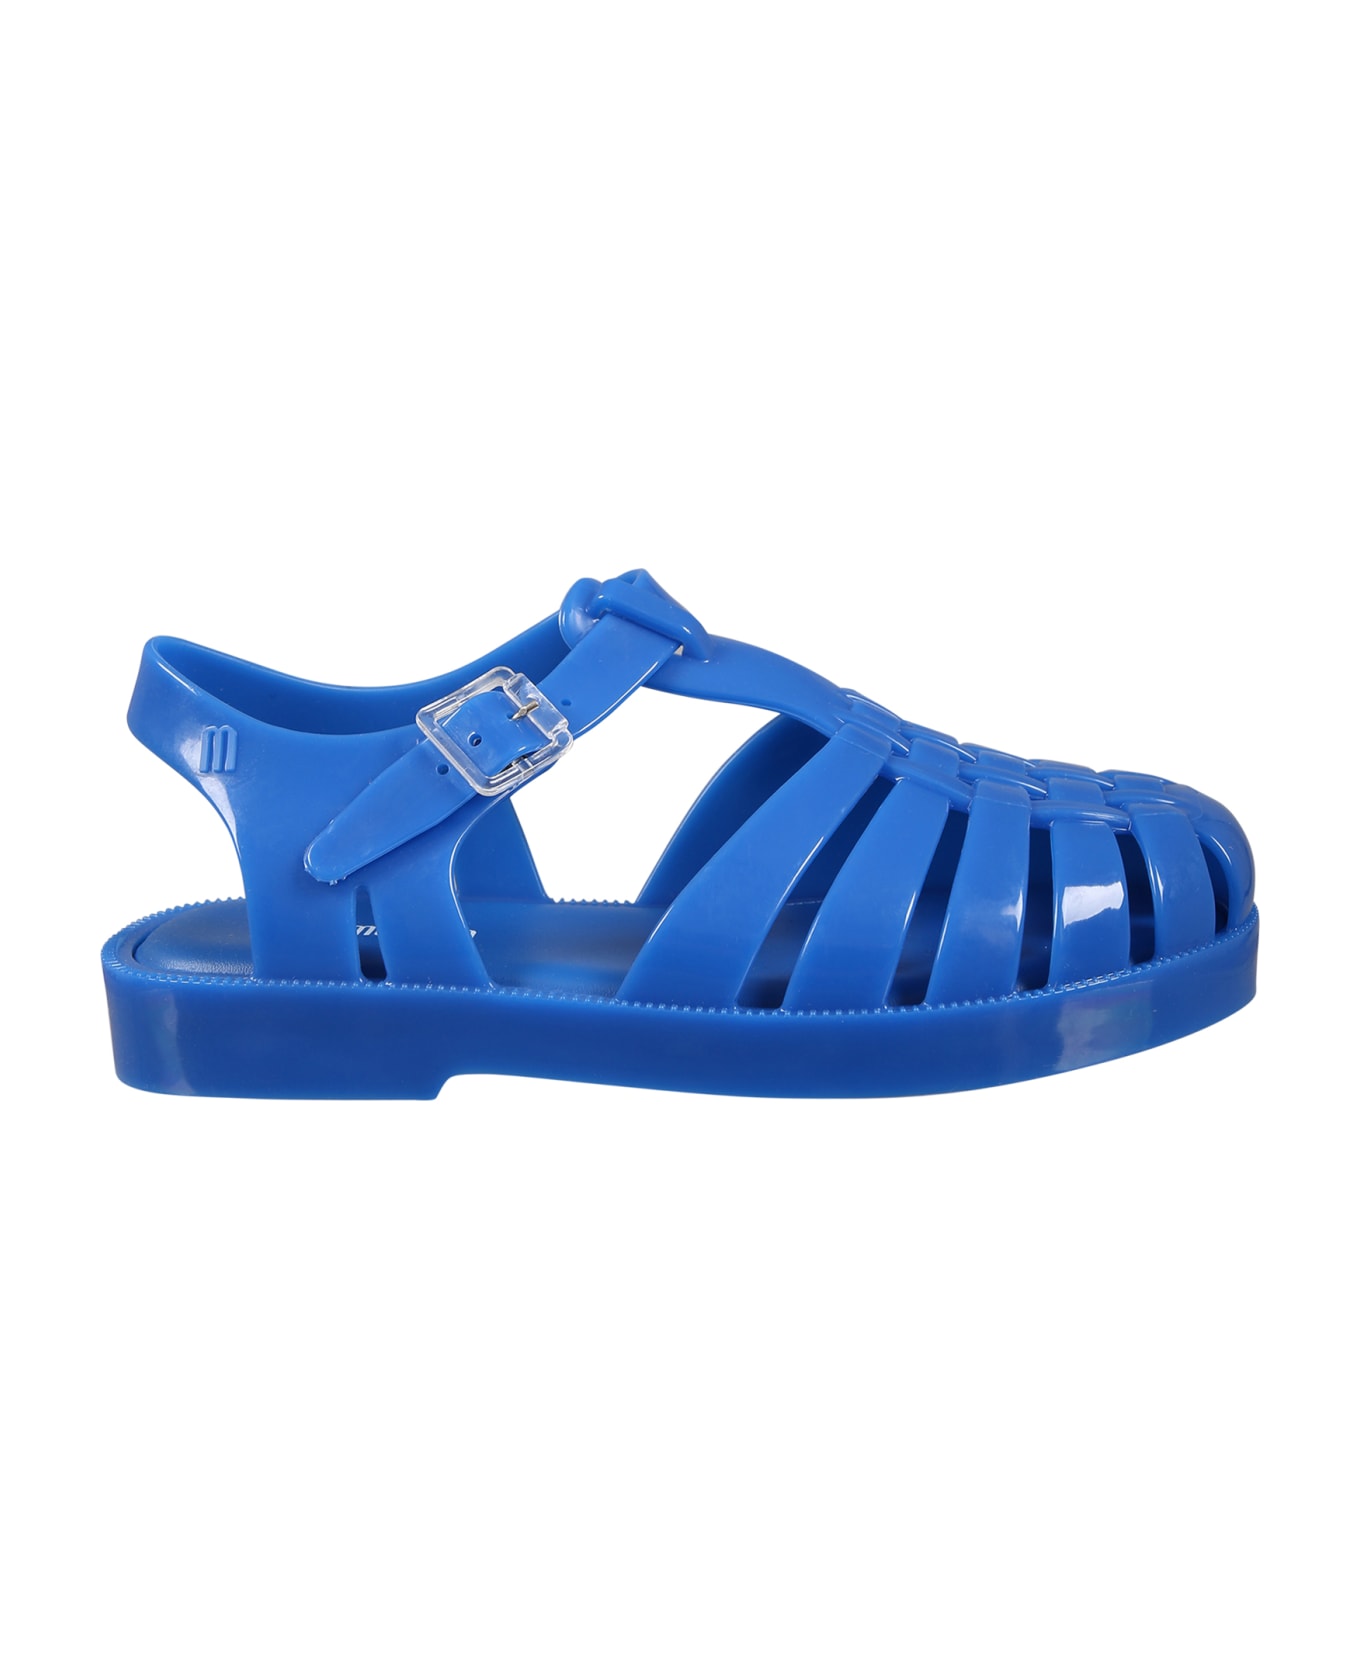 Melissa Blue Sandals For Kids With Logo - Blue シューズ